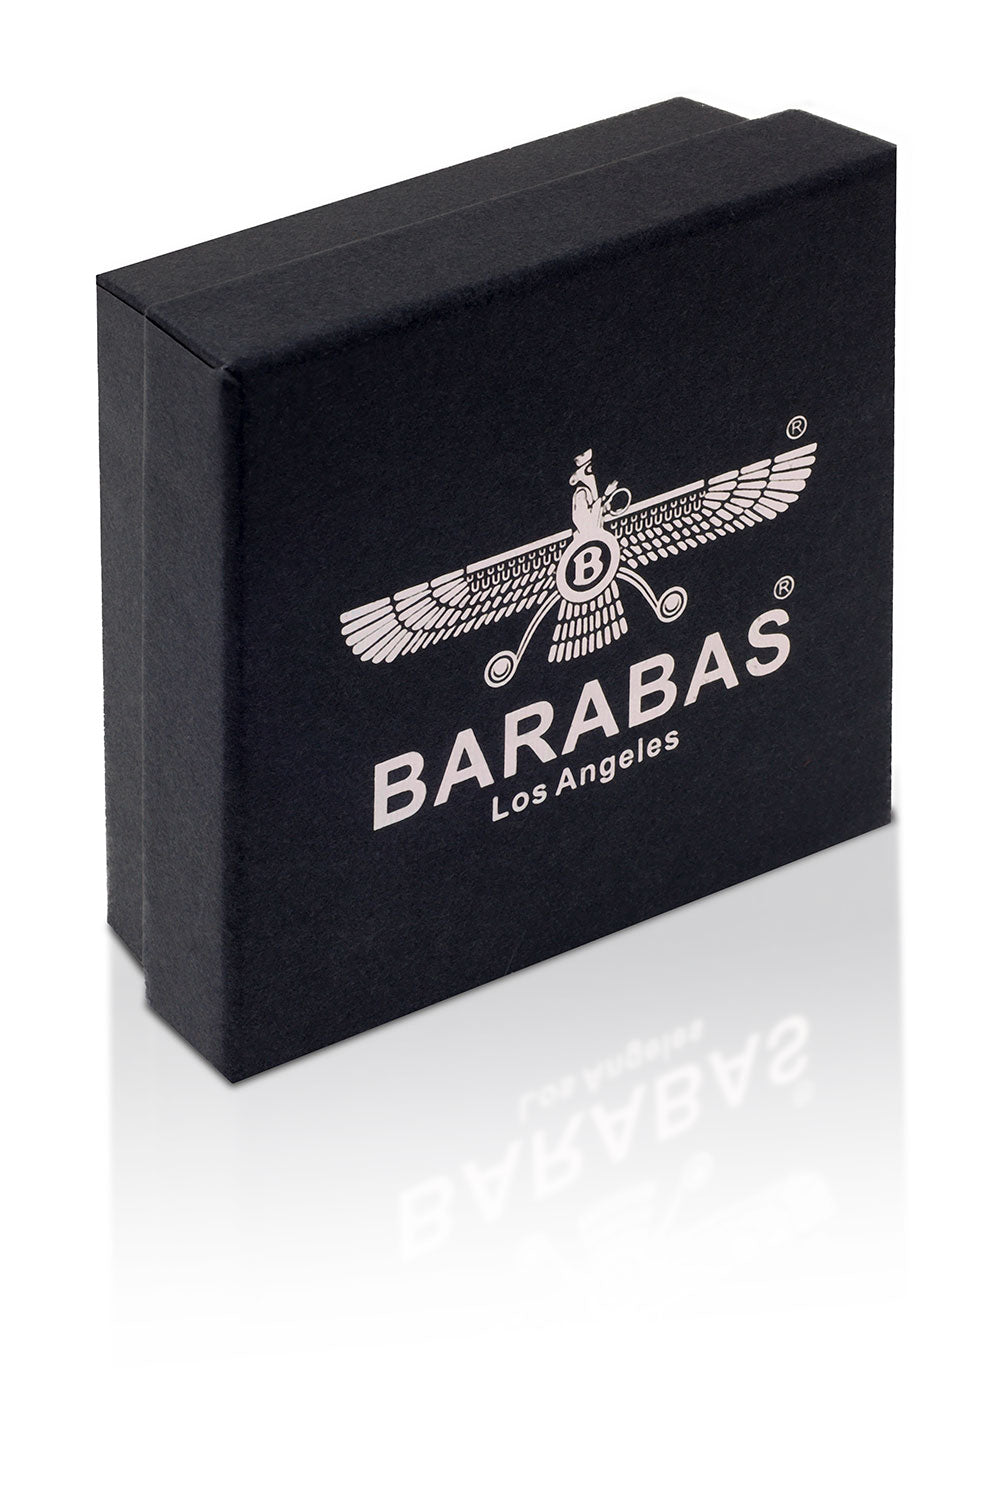 Barabas Unisex Stainless Steel Adjustable Bangle Bracelets 4BMS17 Black